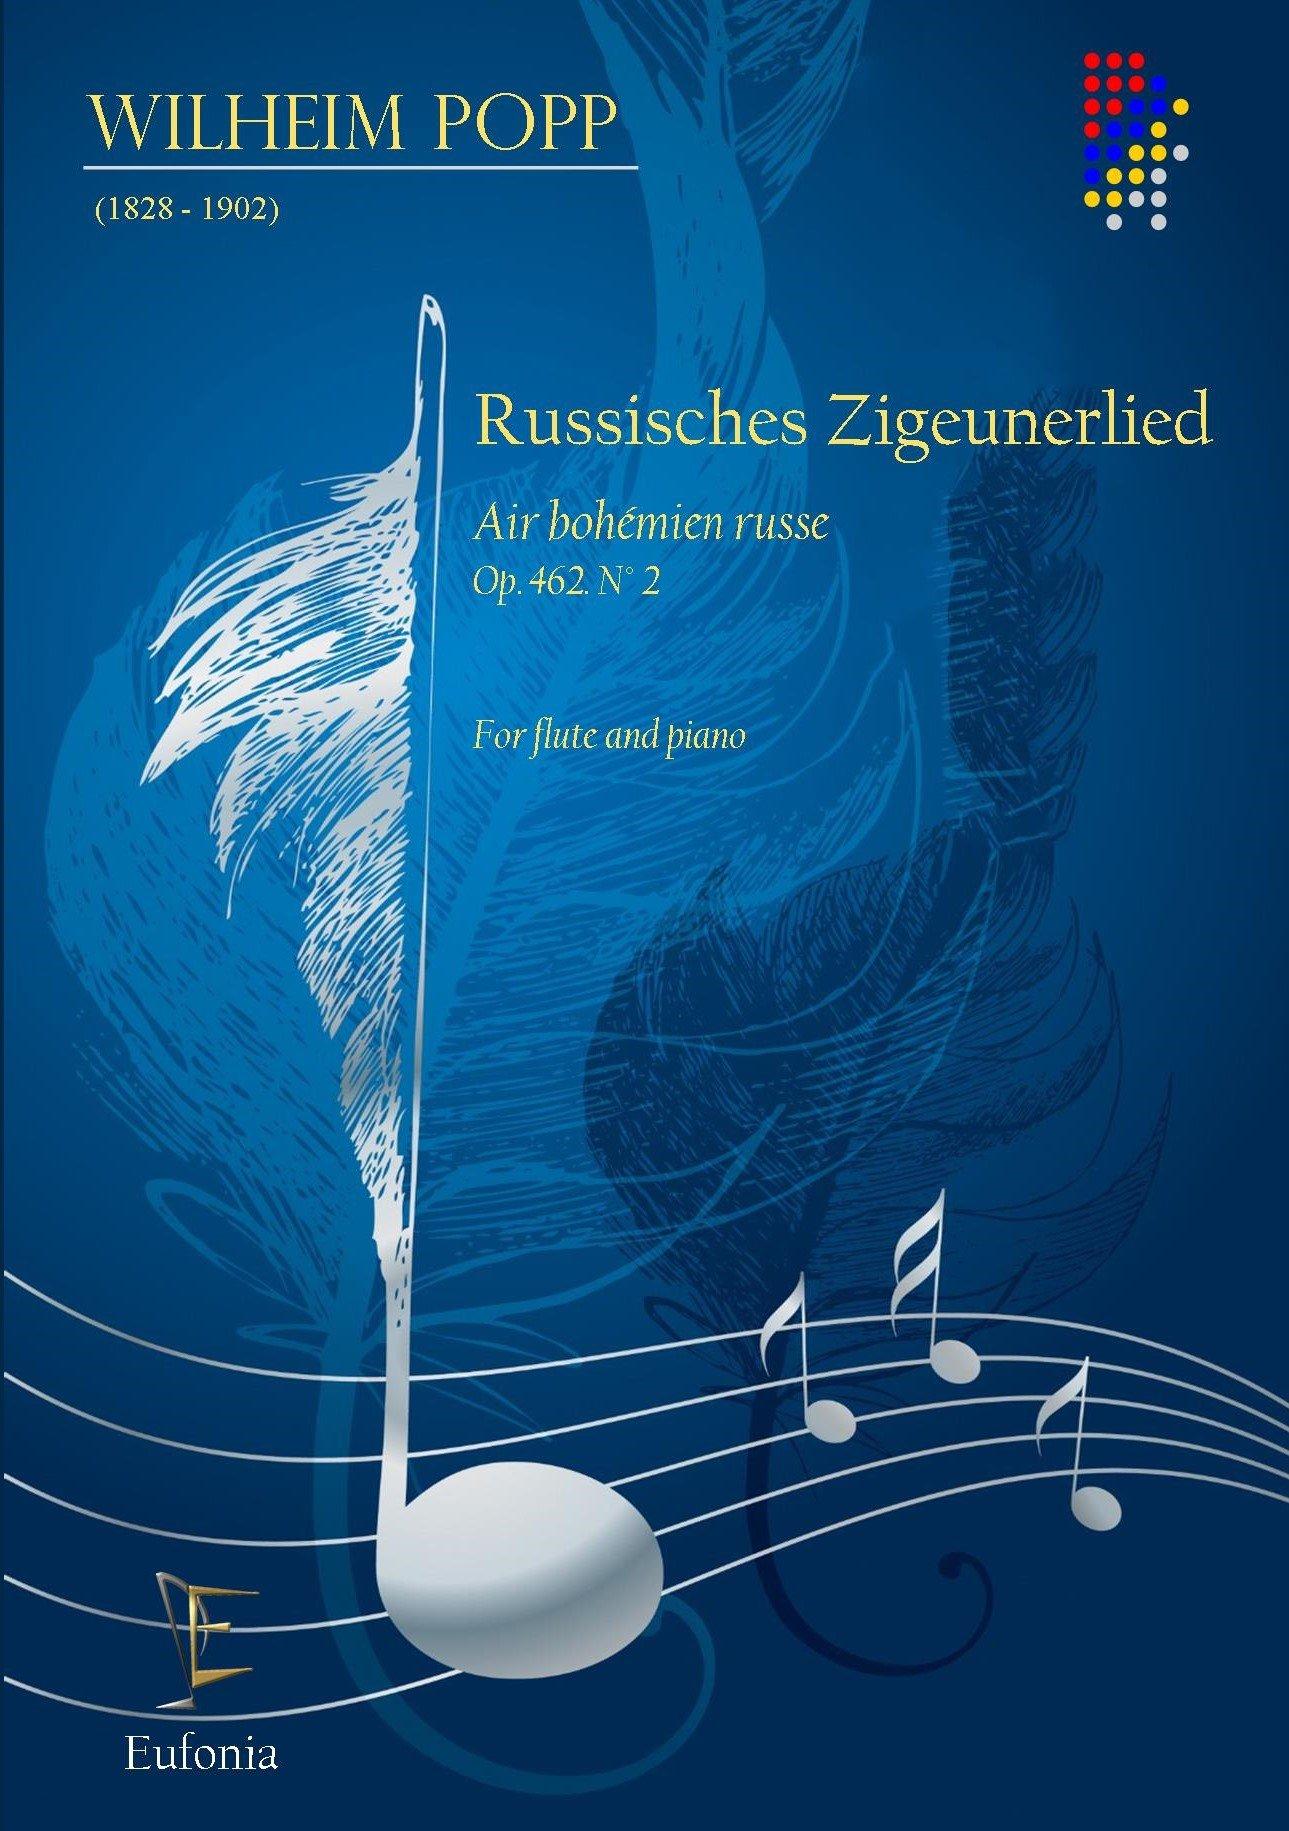 RUSSISCHES ZIGEUNERLIED, Op.462 N°2 - Wilheim Popp | Suono Flauti